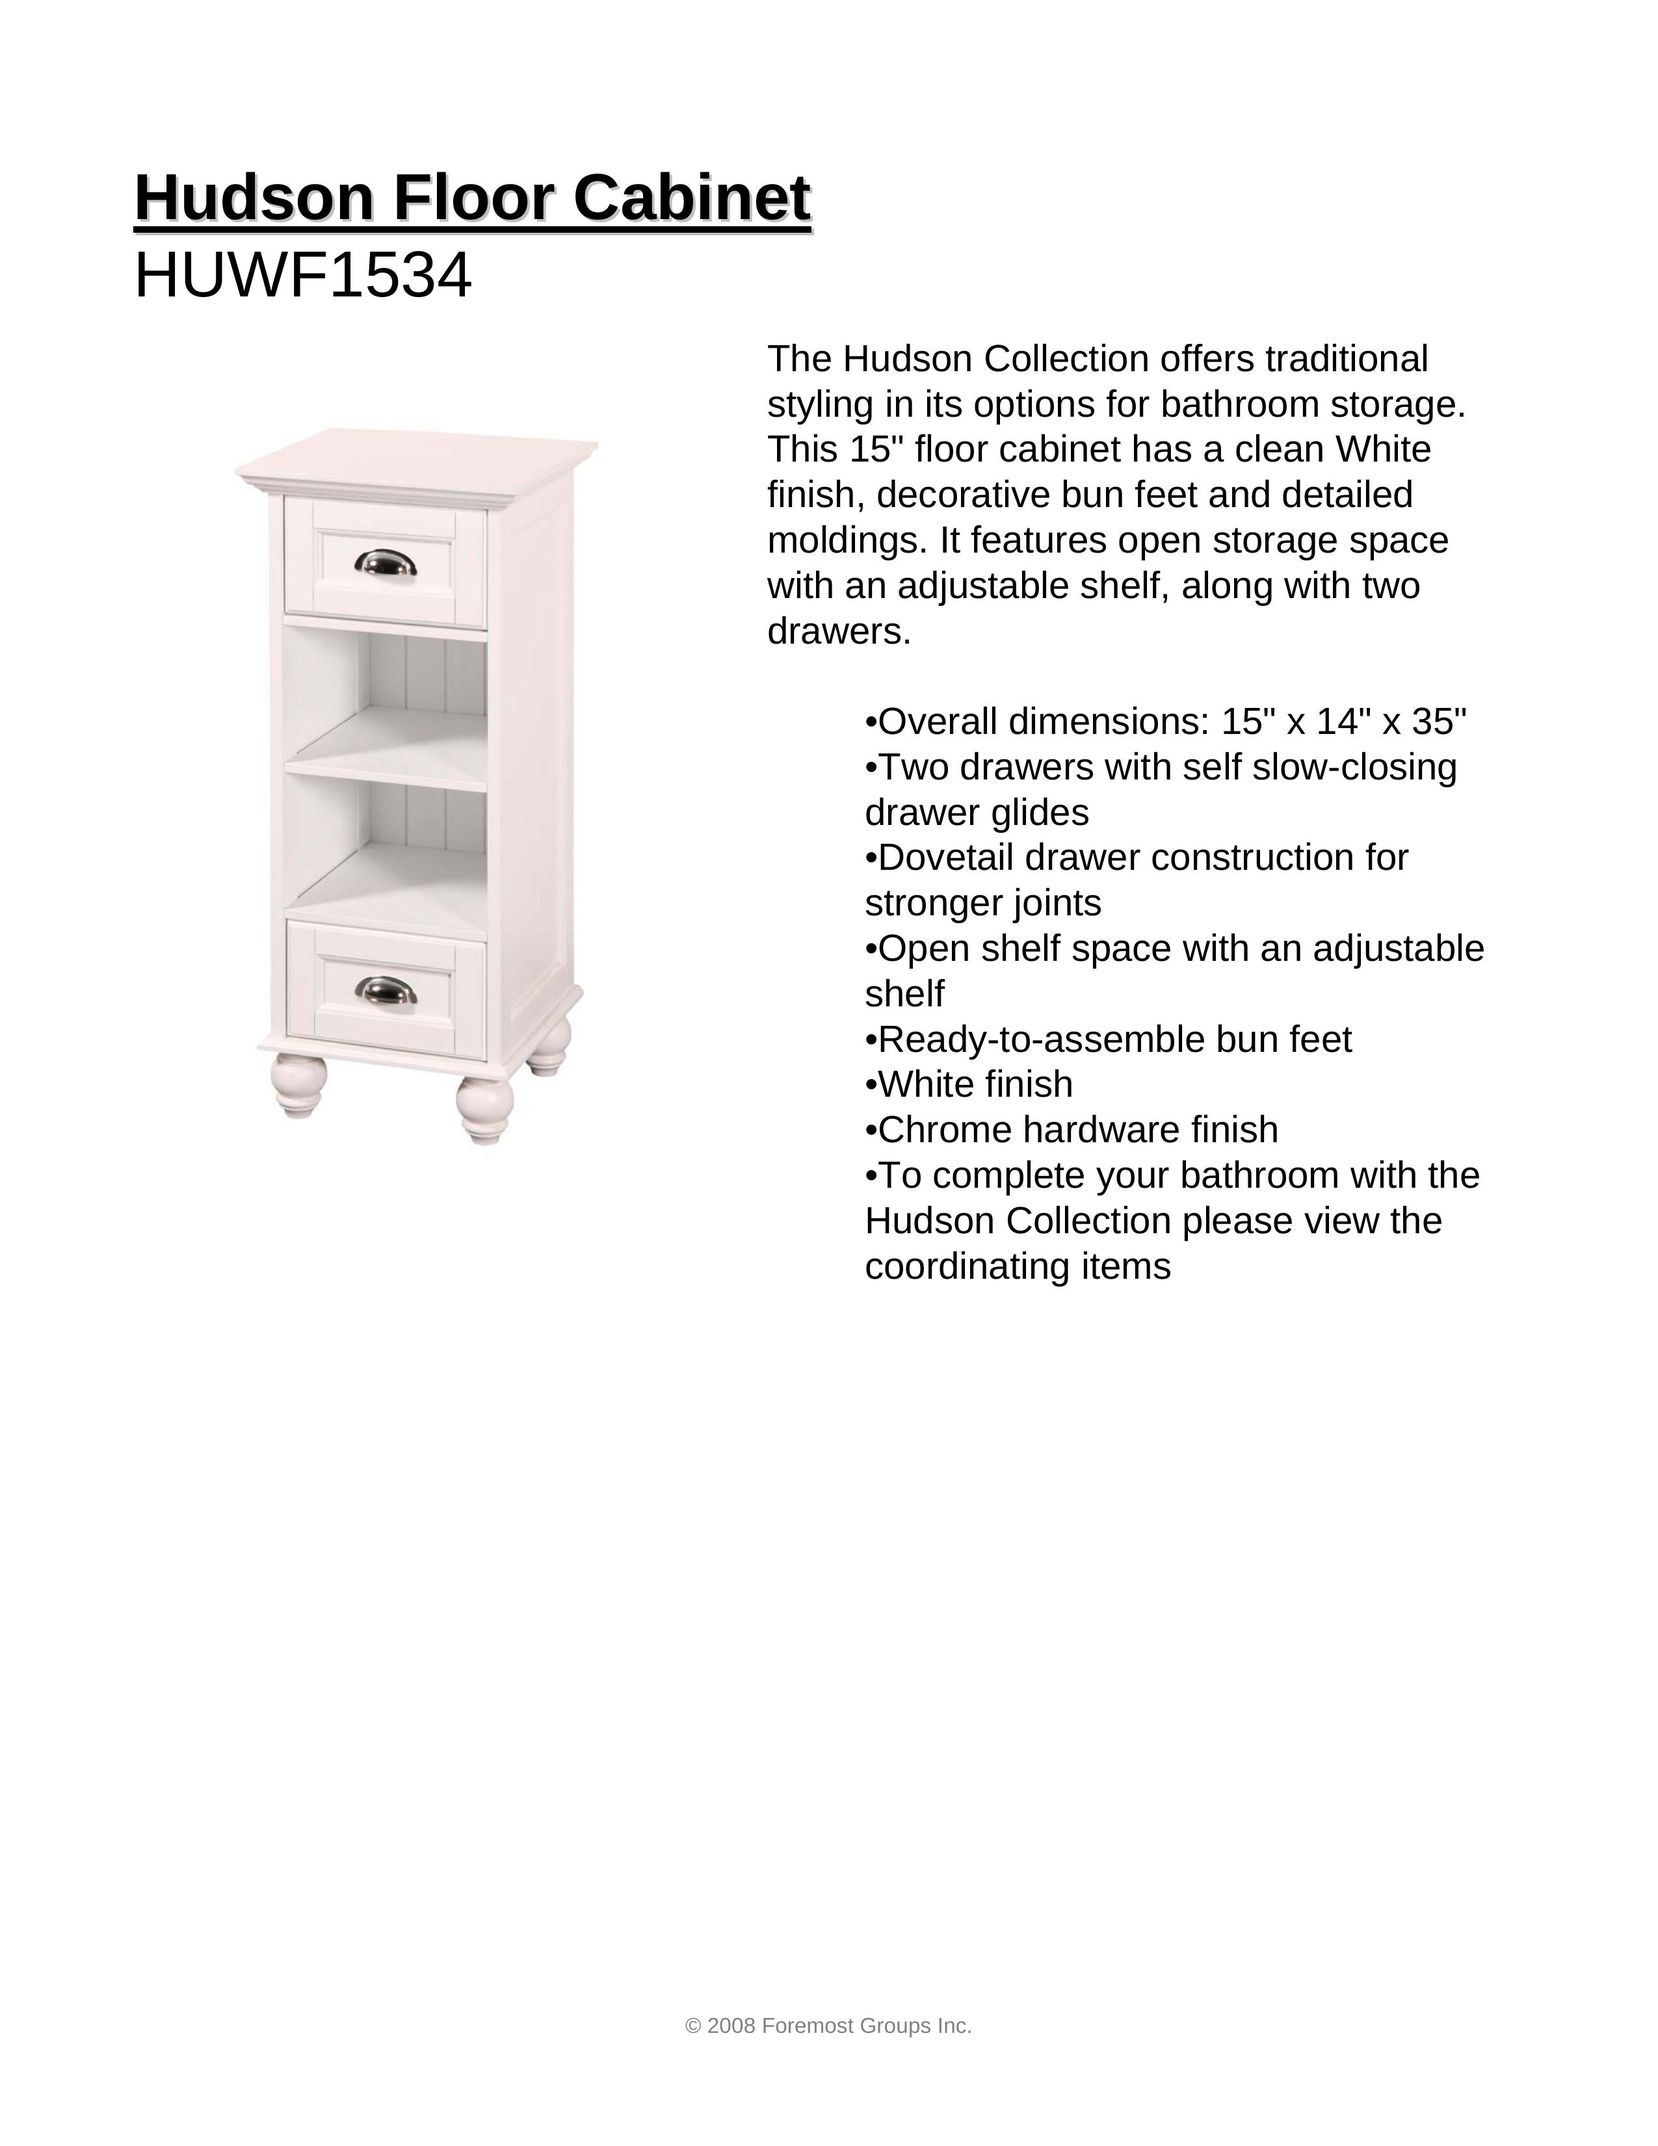 Hudson Sales & Engineering HUWT2066 Indoor Furnishings User Manual